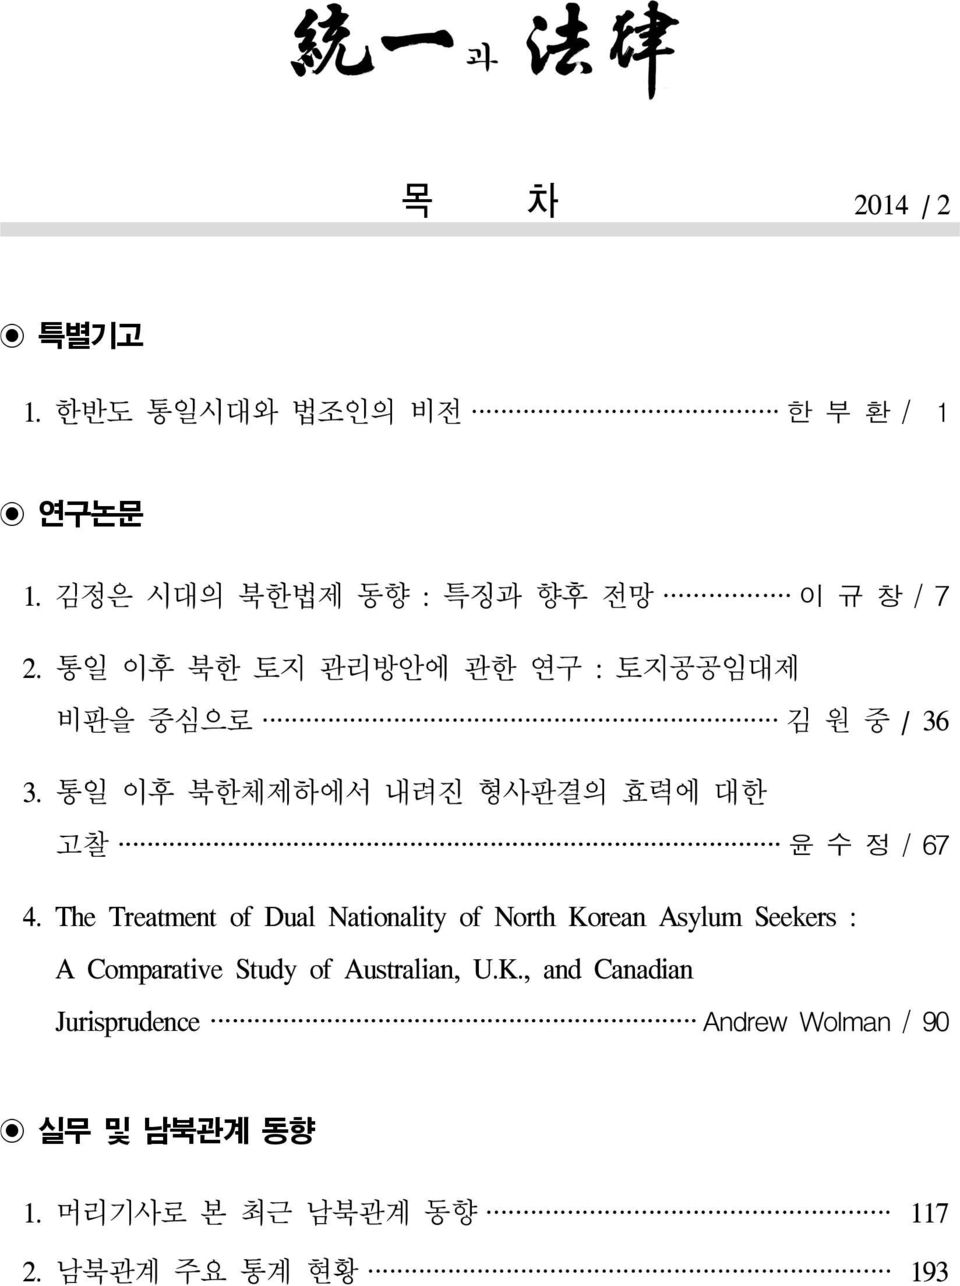 The Treatment of Dual Nationality of North Korean Asylum Seekers : A Comparative Study of Australian, U.